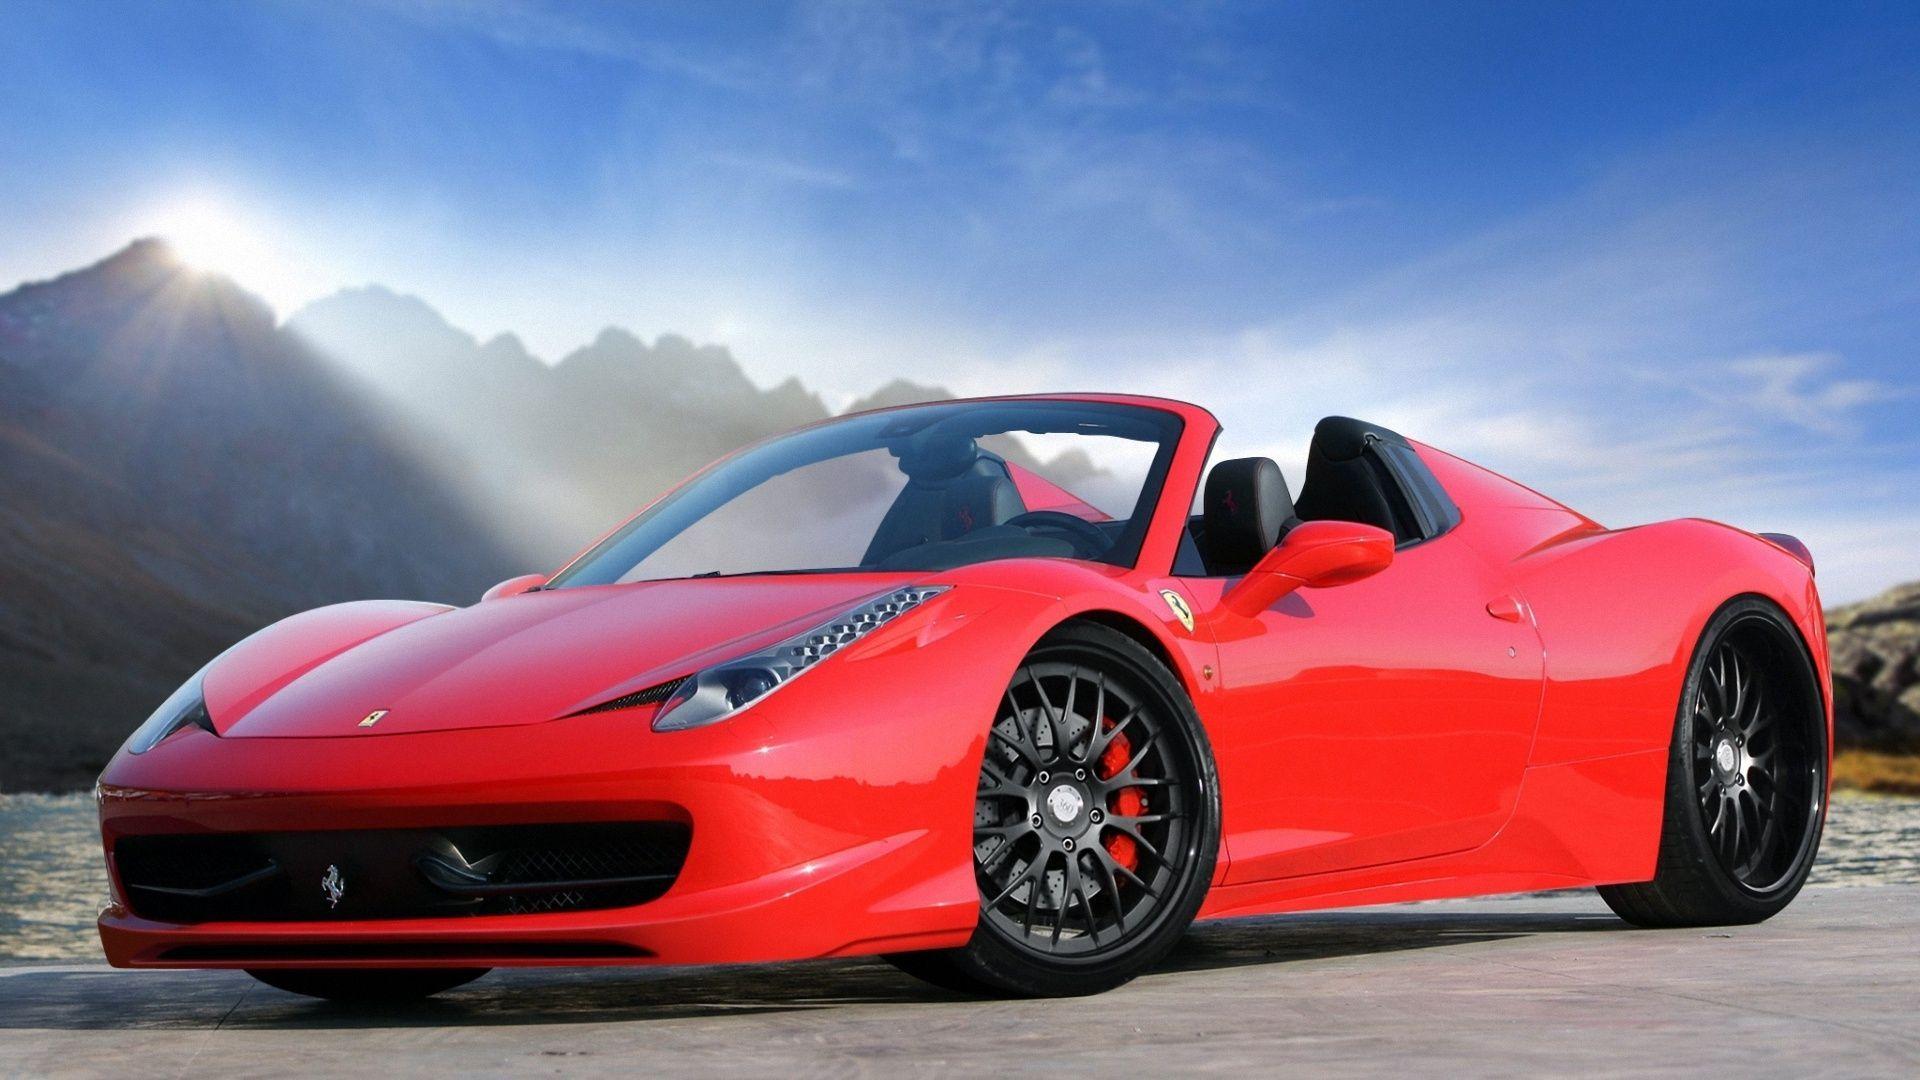 Ferrari HD 1080p wallpaper download free red ferrari 1080p